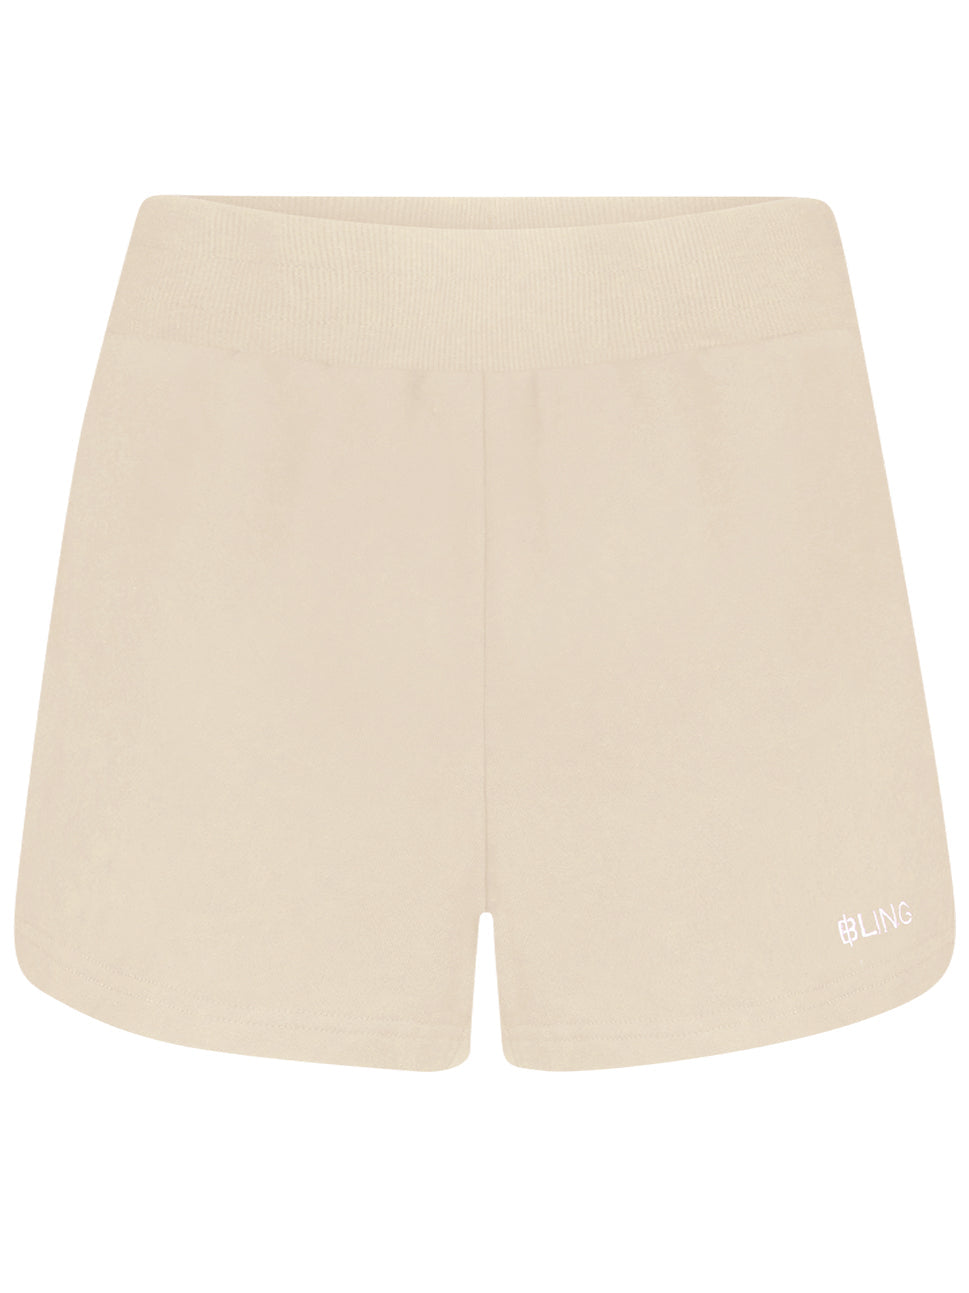 Bling Knit Shorts Nude BLW08BC KBS01